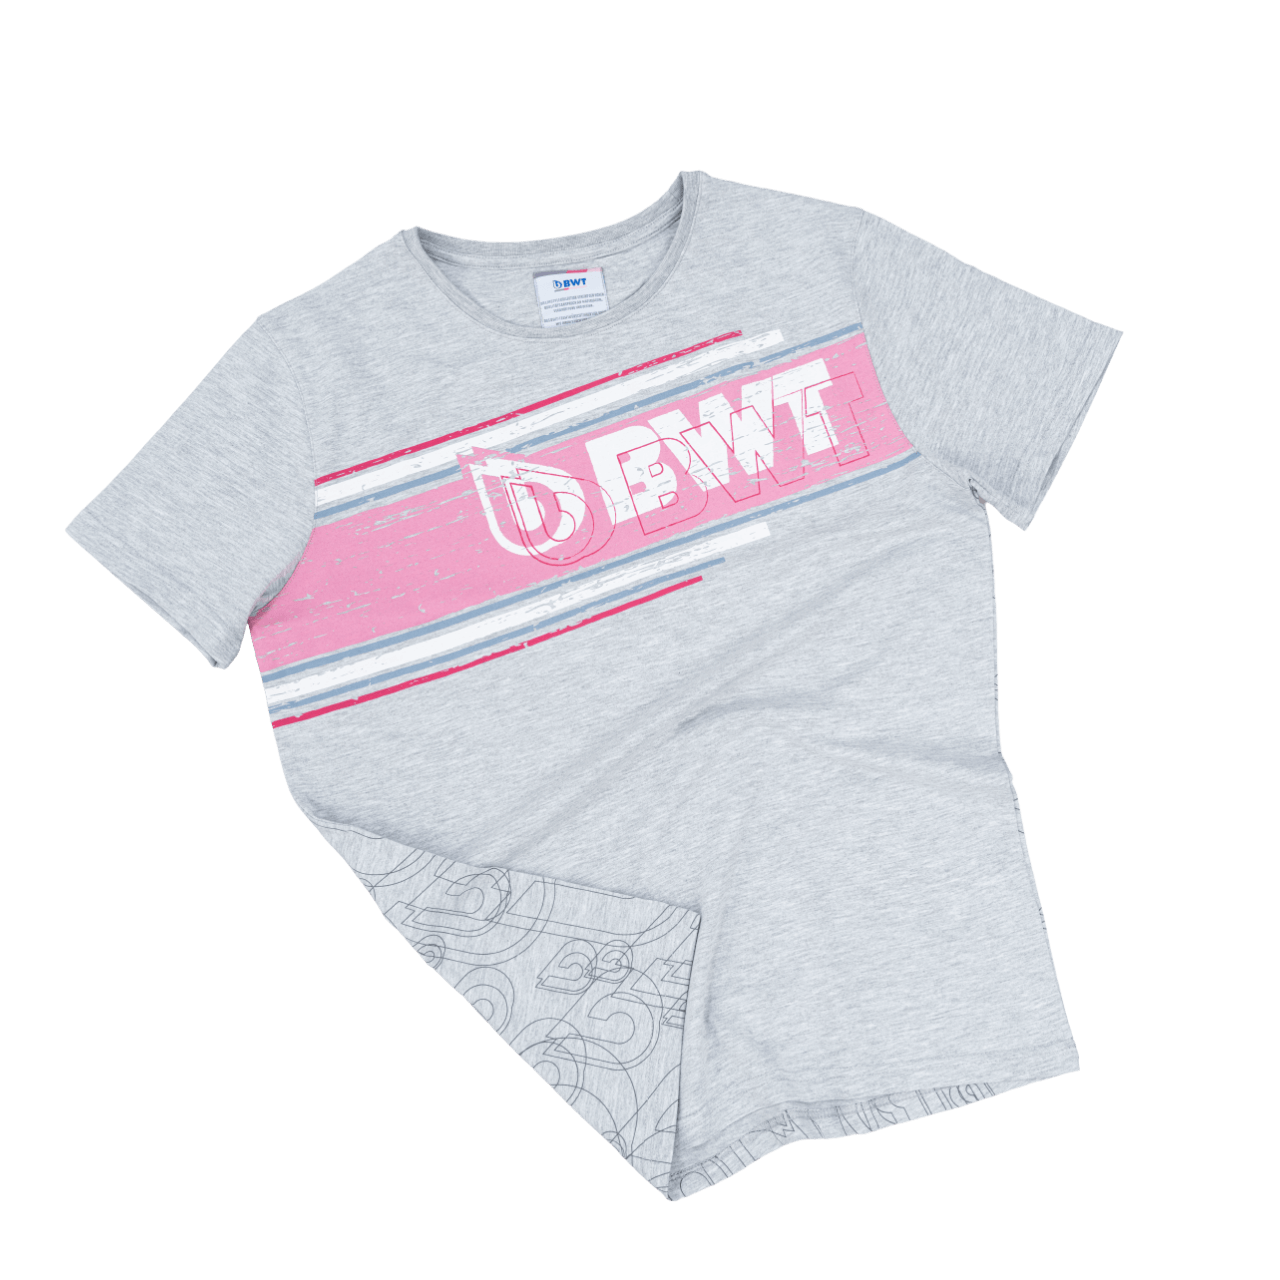 BWT Lifestyle T-shirt men grey with white BWT logo on pink background